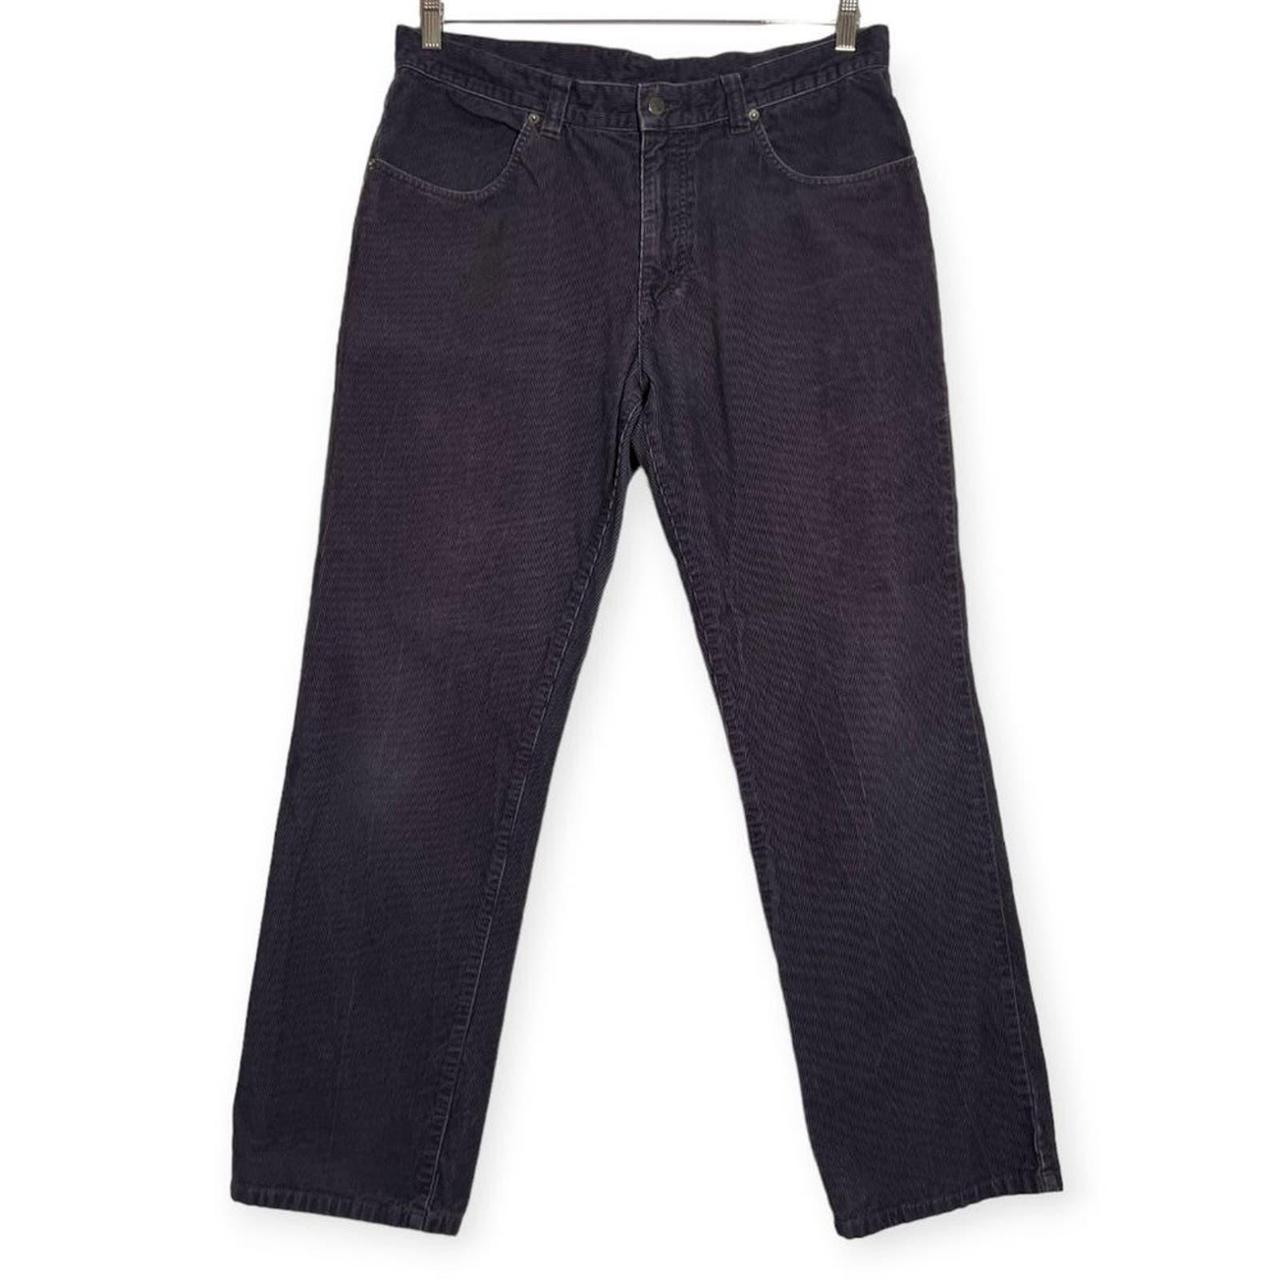 Patagonia Cord Pants Mens 35 x 31 Purple Navy Cotton... - Depop